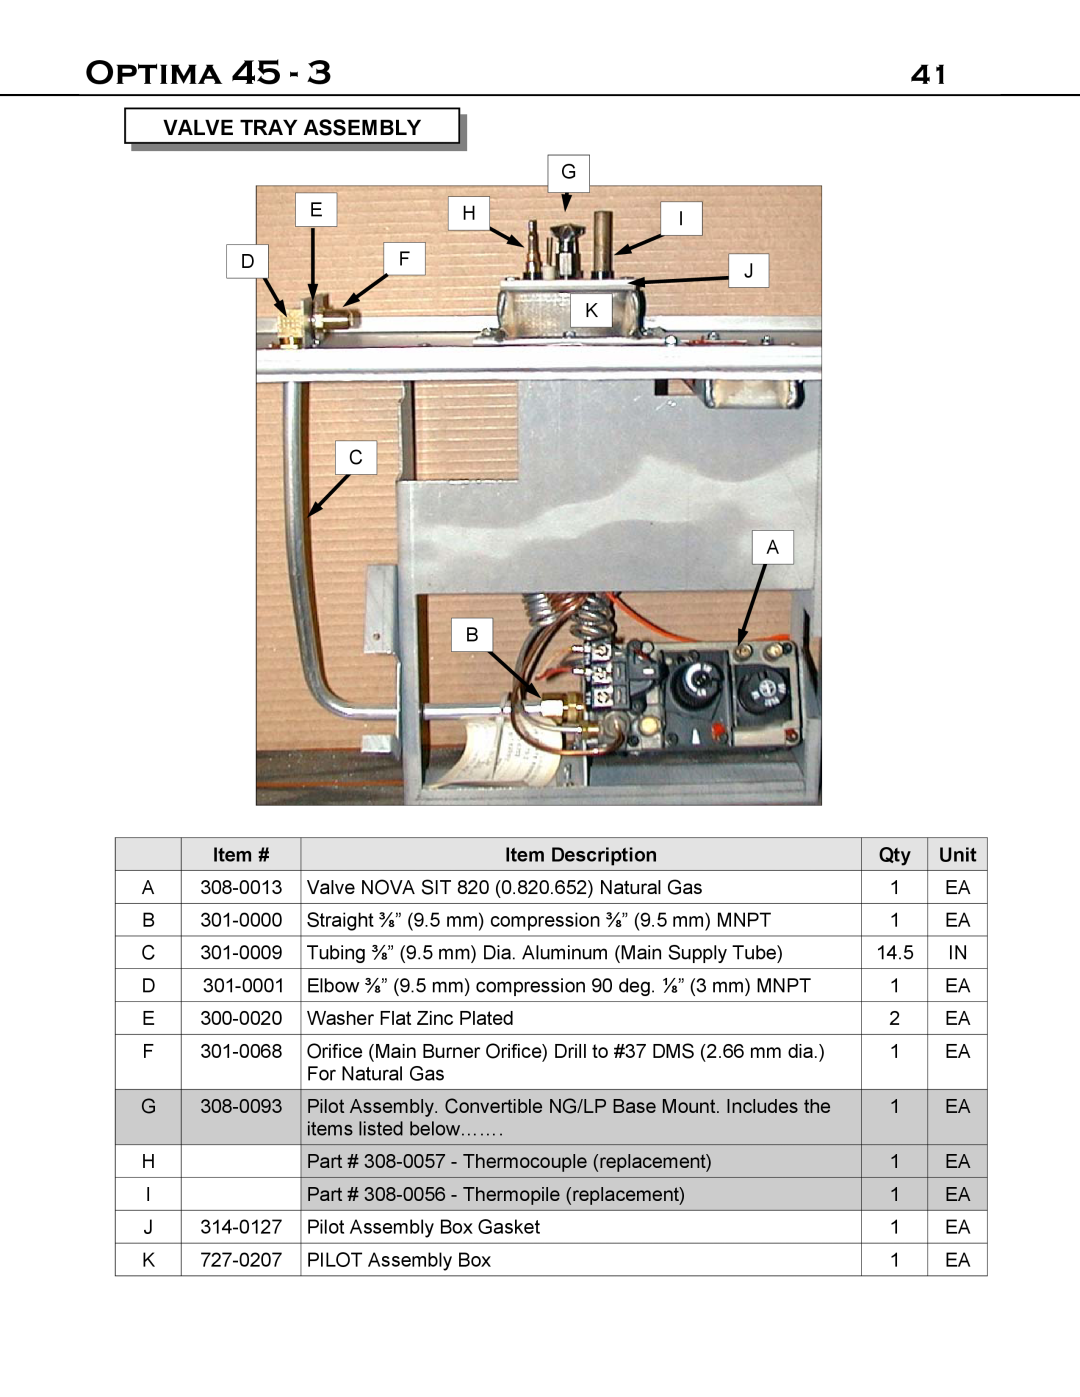 Optima Company 45 - 3 manual Valve Tray Assembly, Optima, Item #, Item Description, Unit 